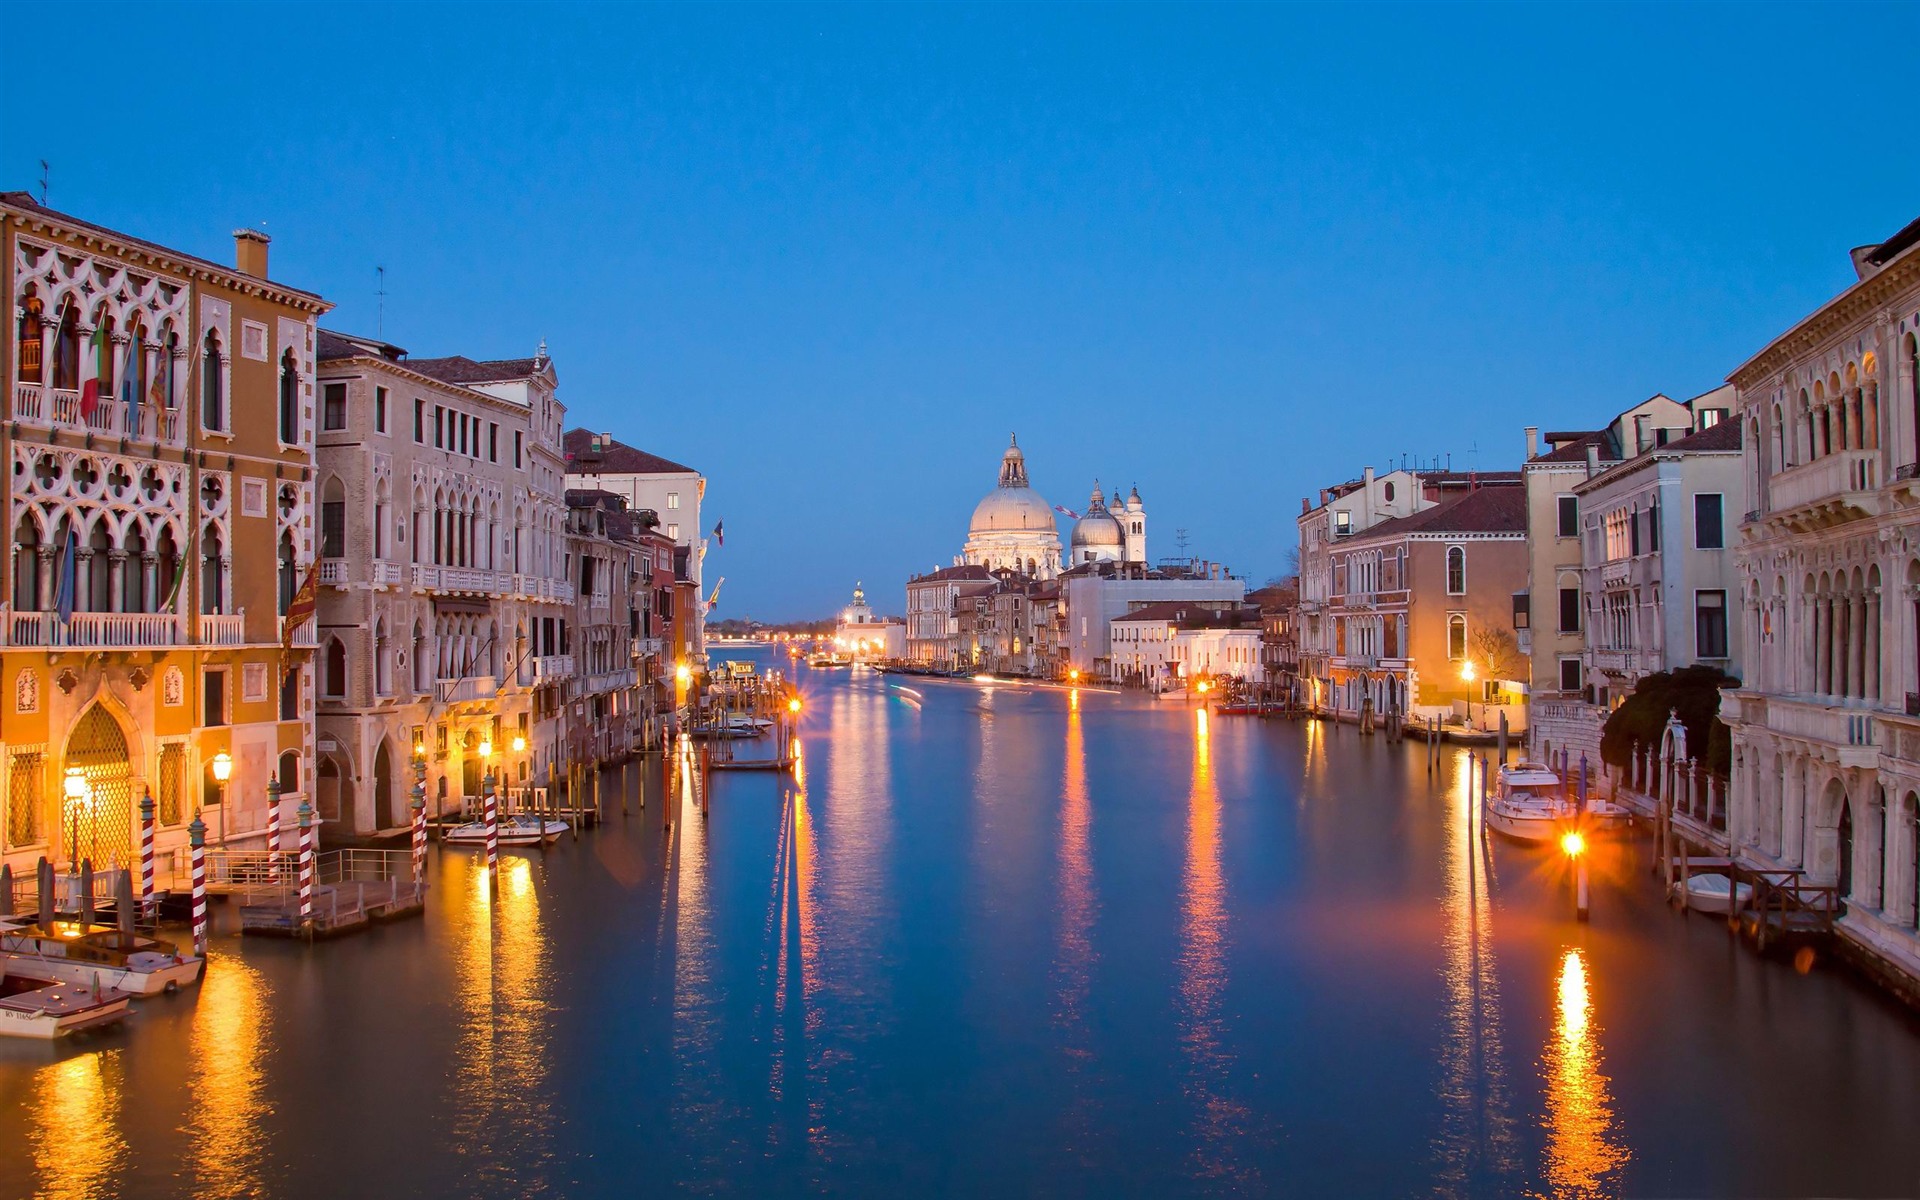 Venice City Hd Wallpapers | Free HD Desktop Wallpapers ...